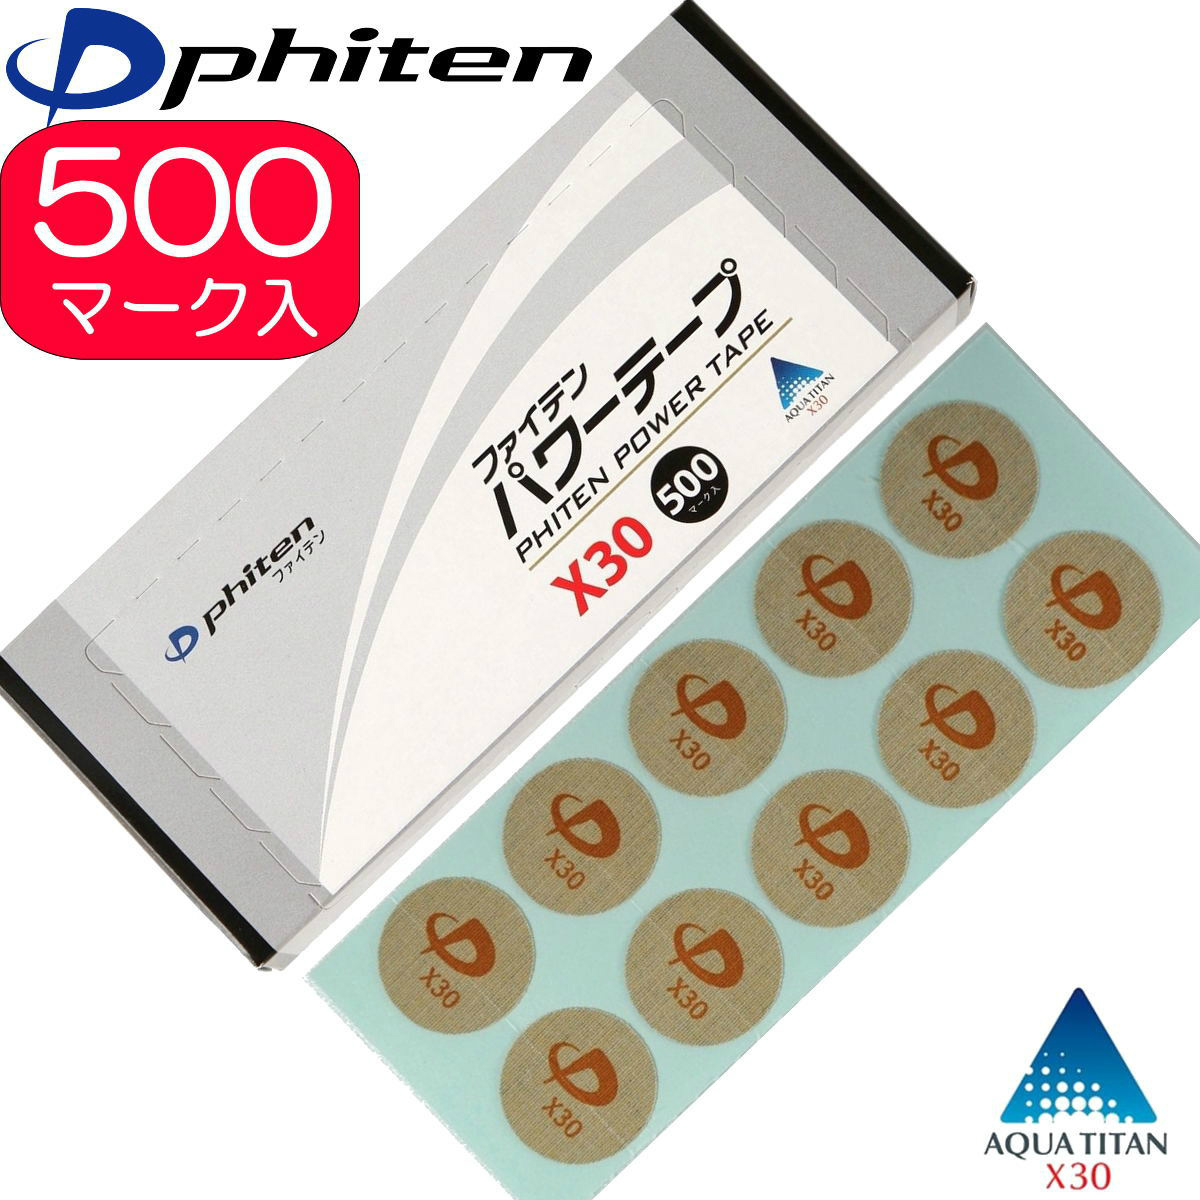 Phiten パワーテープ X30 0109PT710000 濃度30倍アクアチタン含浸 500マーク入 10シール×50シート×3箱